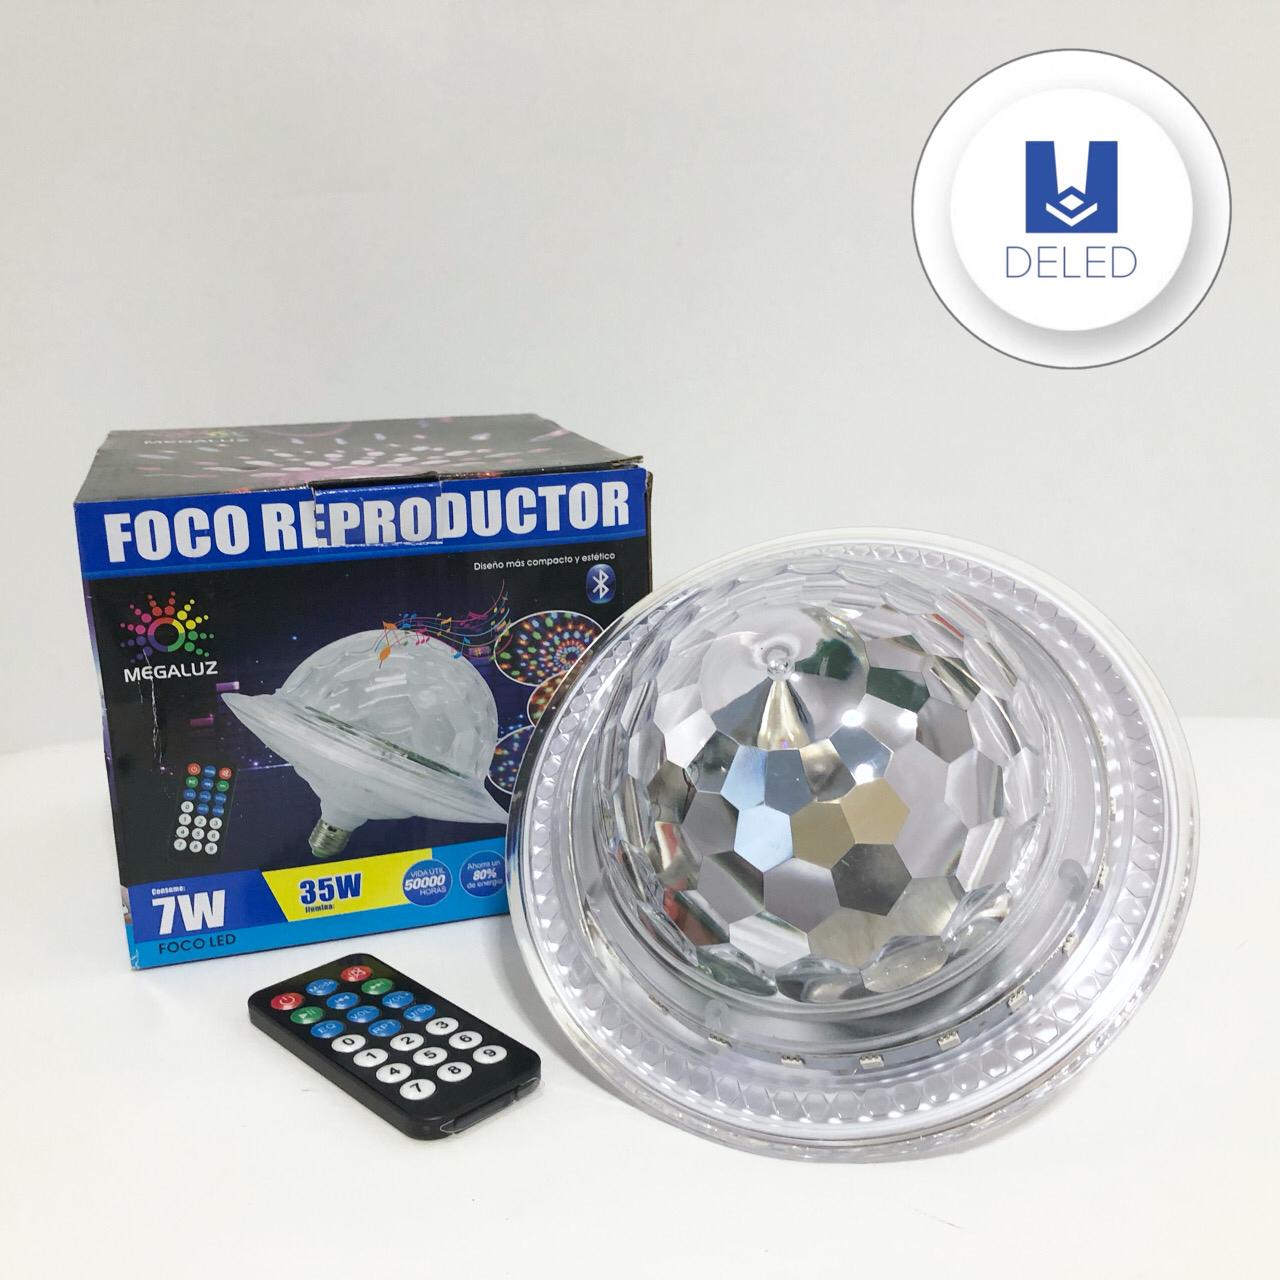 Foco LED / Lámpara LED RGB Multicolor con Bocina Bluetooth Inalámbrica 7w MEGALUZ VL-003